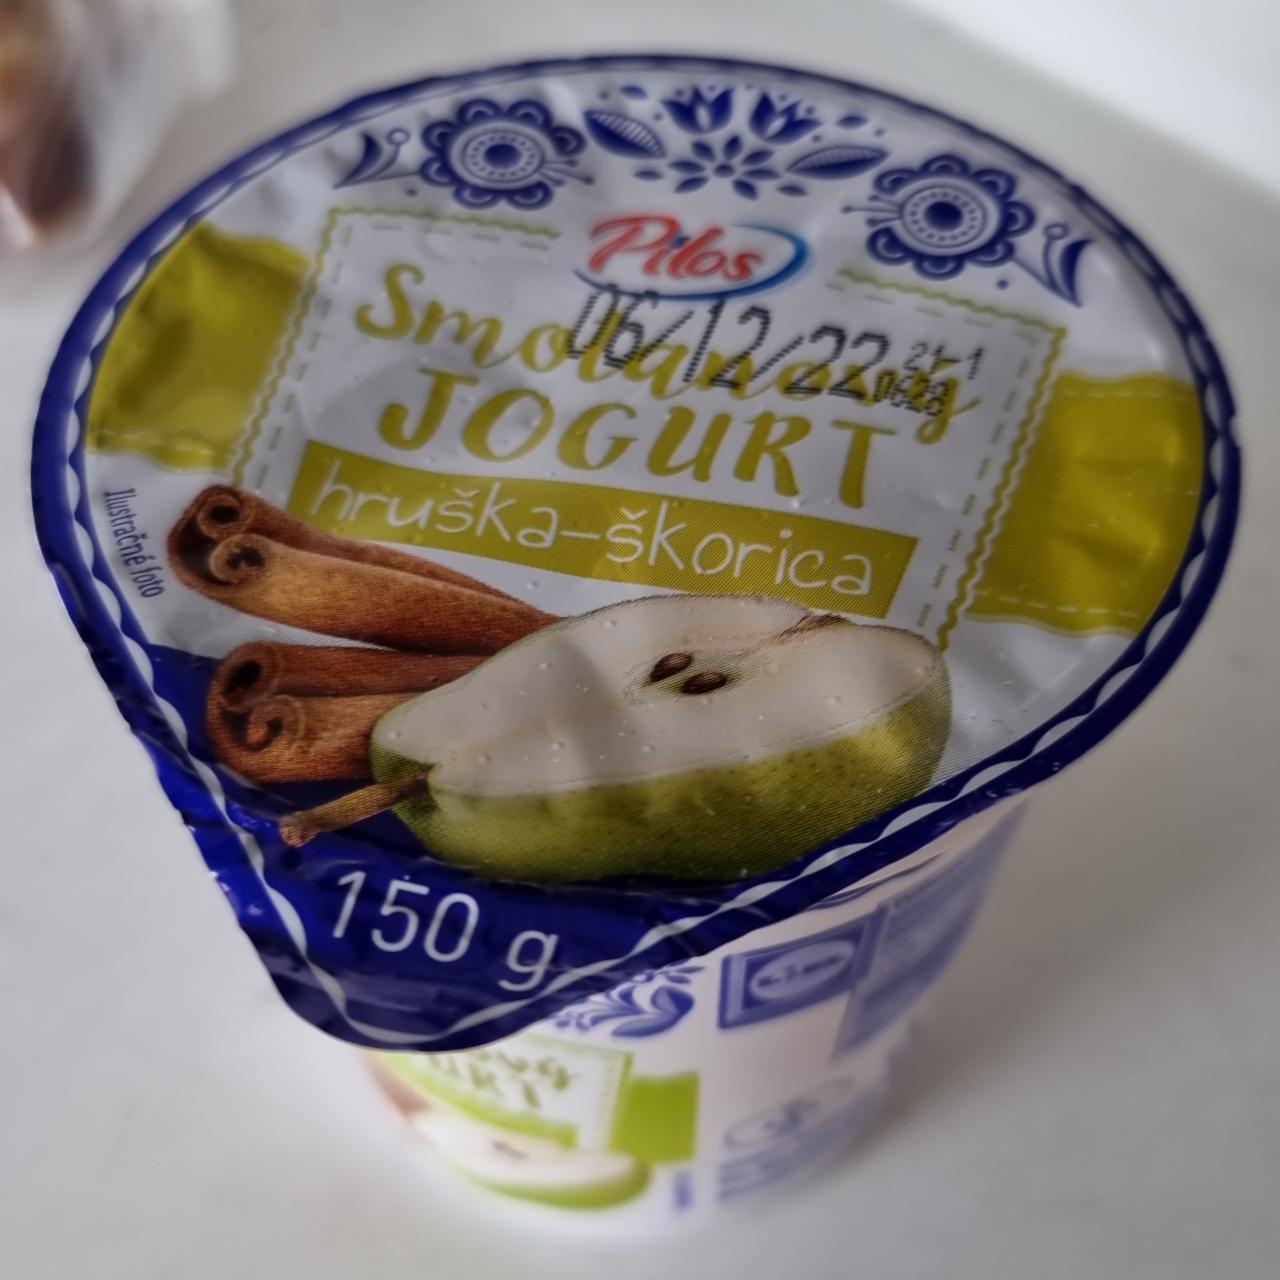 Fotografie - Smotanový jogurt hruška-škorica Pilos